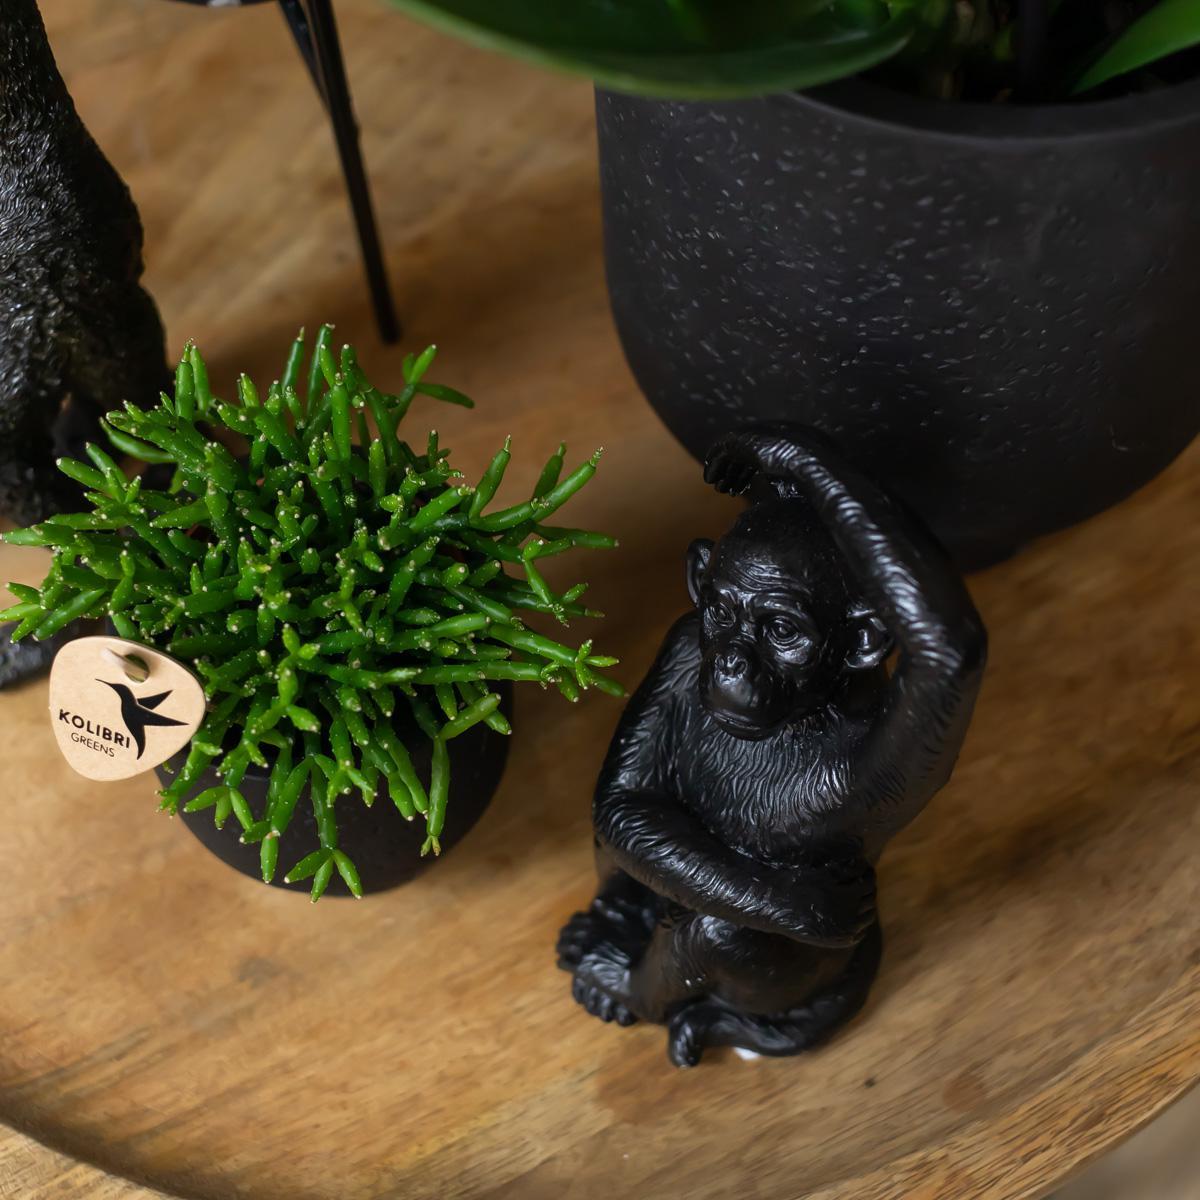 Kolibri Home | Ornament - Decoratie beeld Sitting Monkey - Black